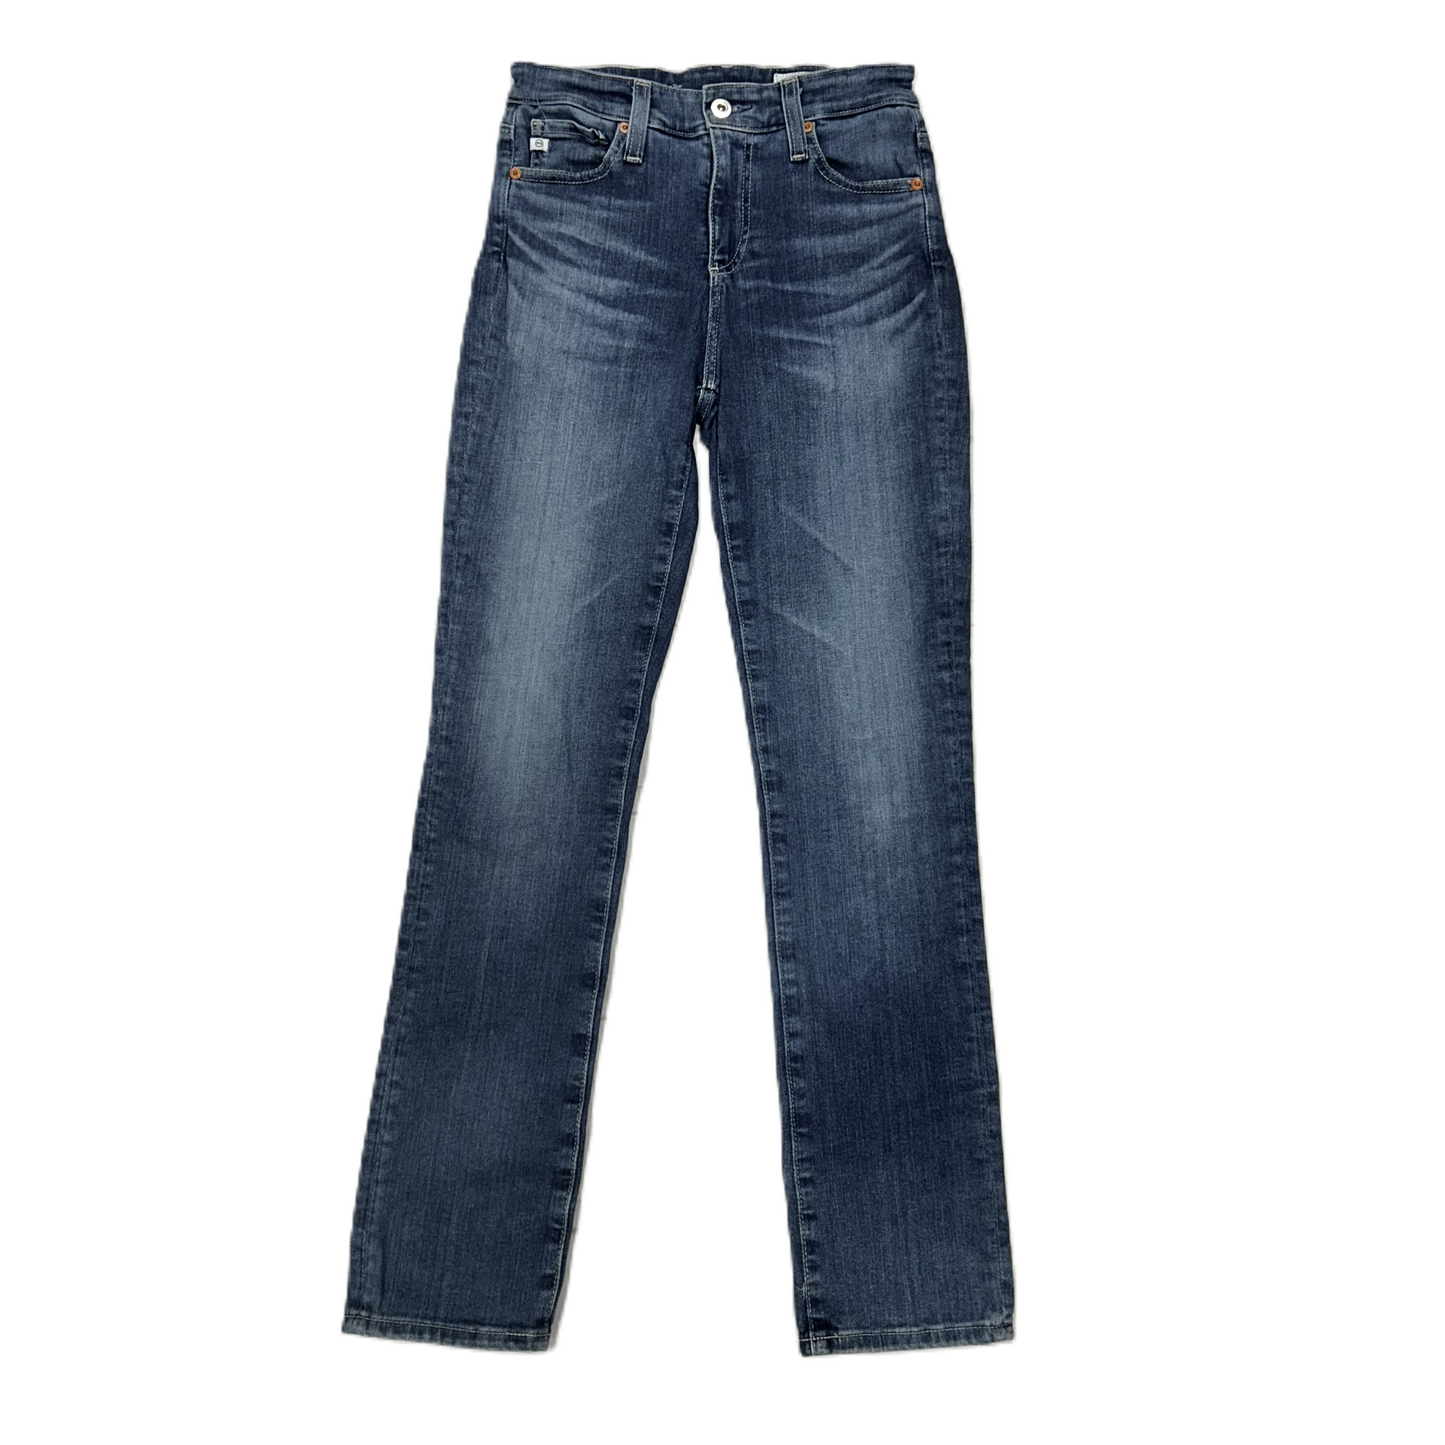 Denim Jeans Designer By Anthropologie, Size: 0